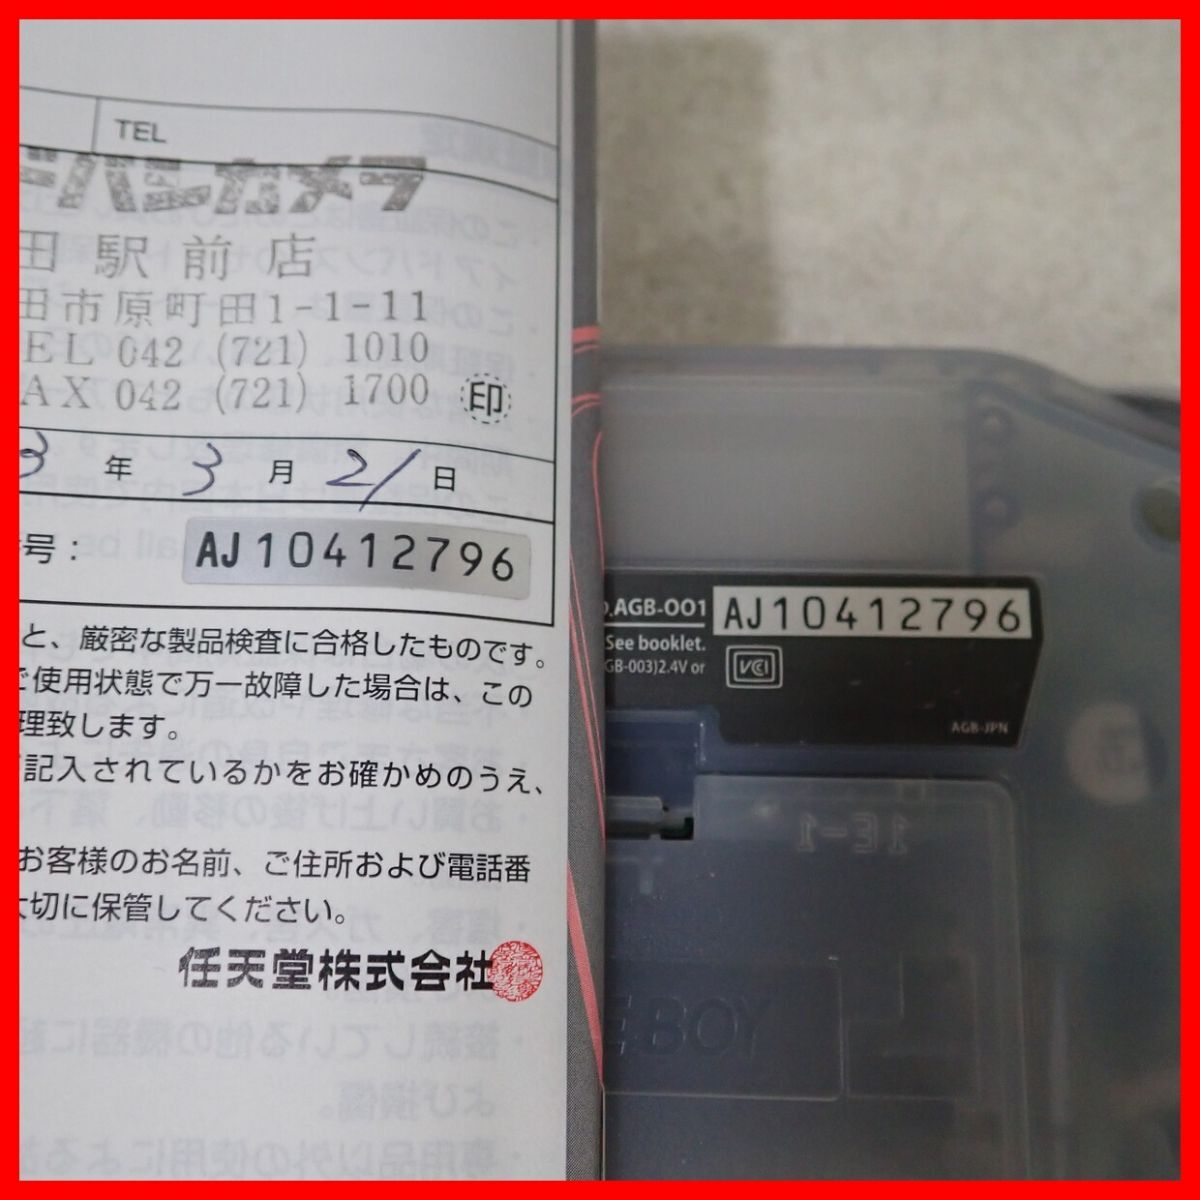  operation goods GBA Game Boy Advance body AGB-001 Mill key blue Nintendo nintendo box opinion attaching [10